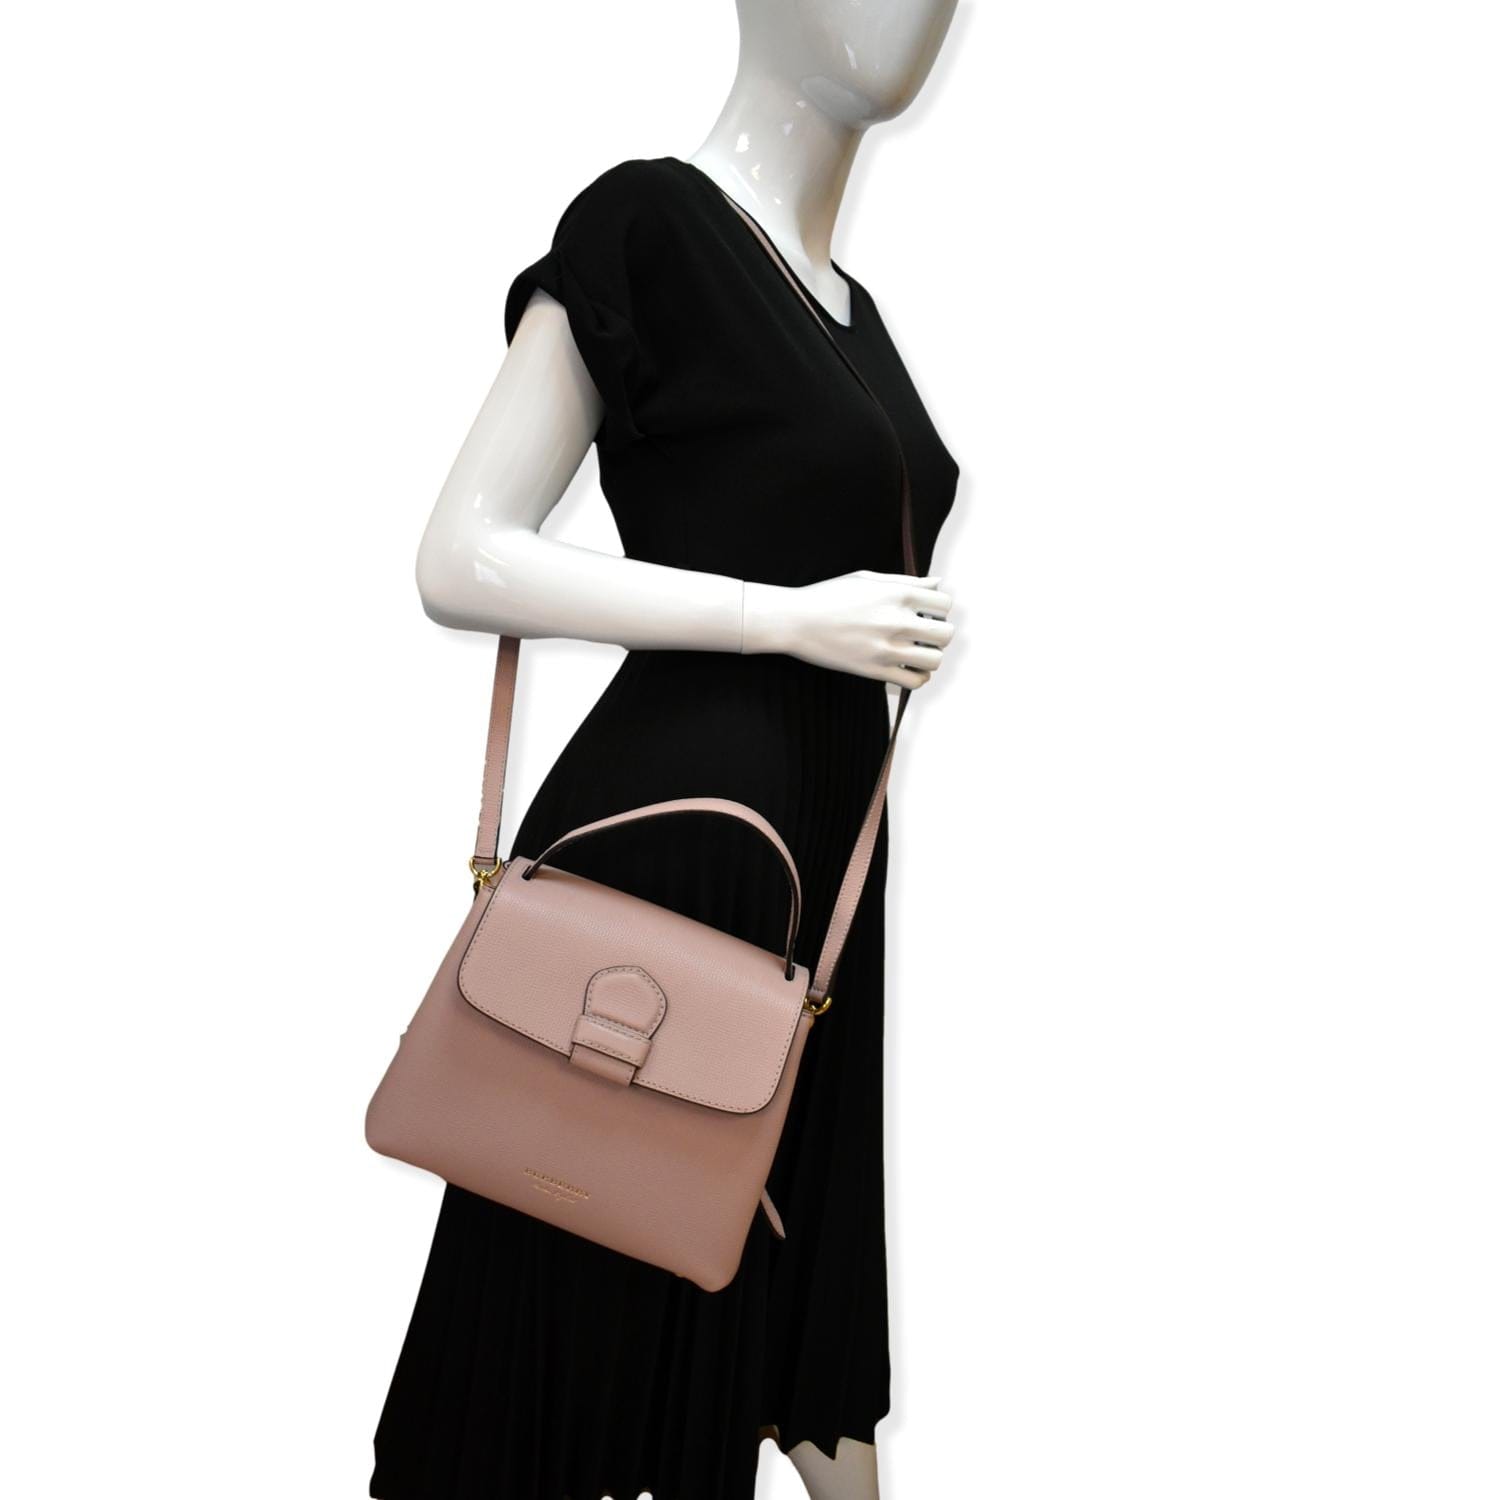 Burberry Speedy red & white leather satchel handbag shoulder bag